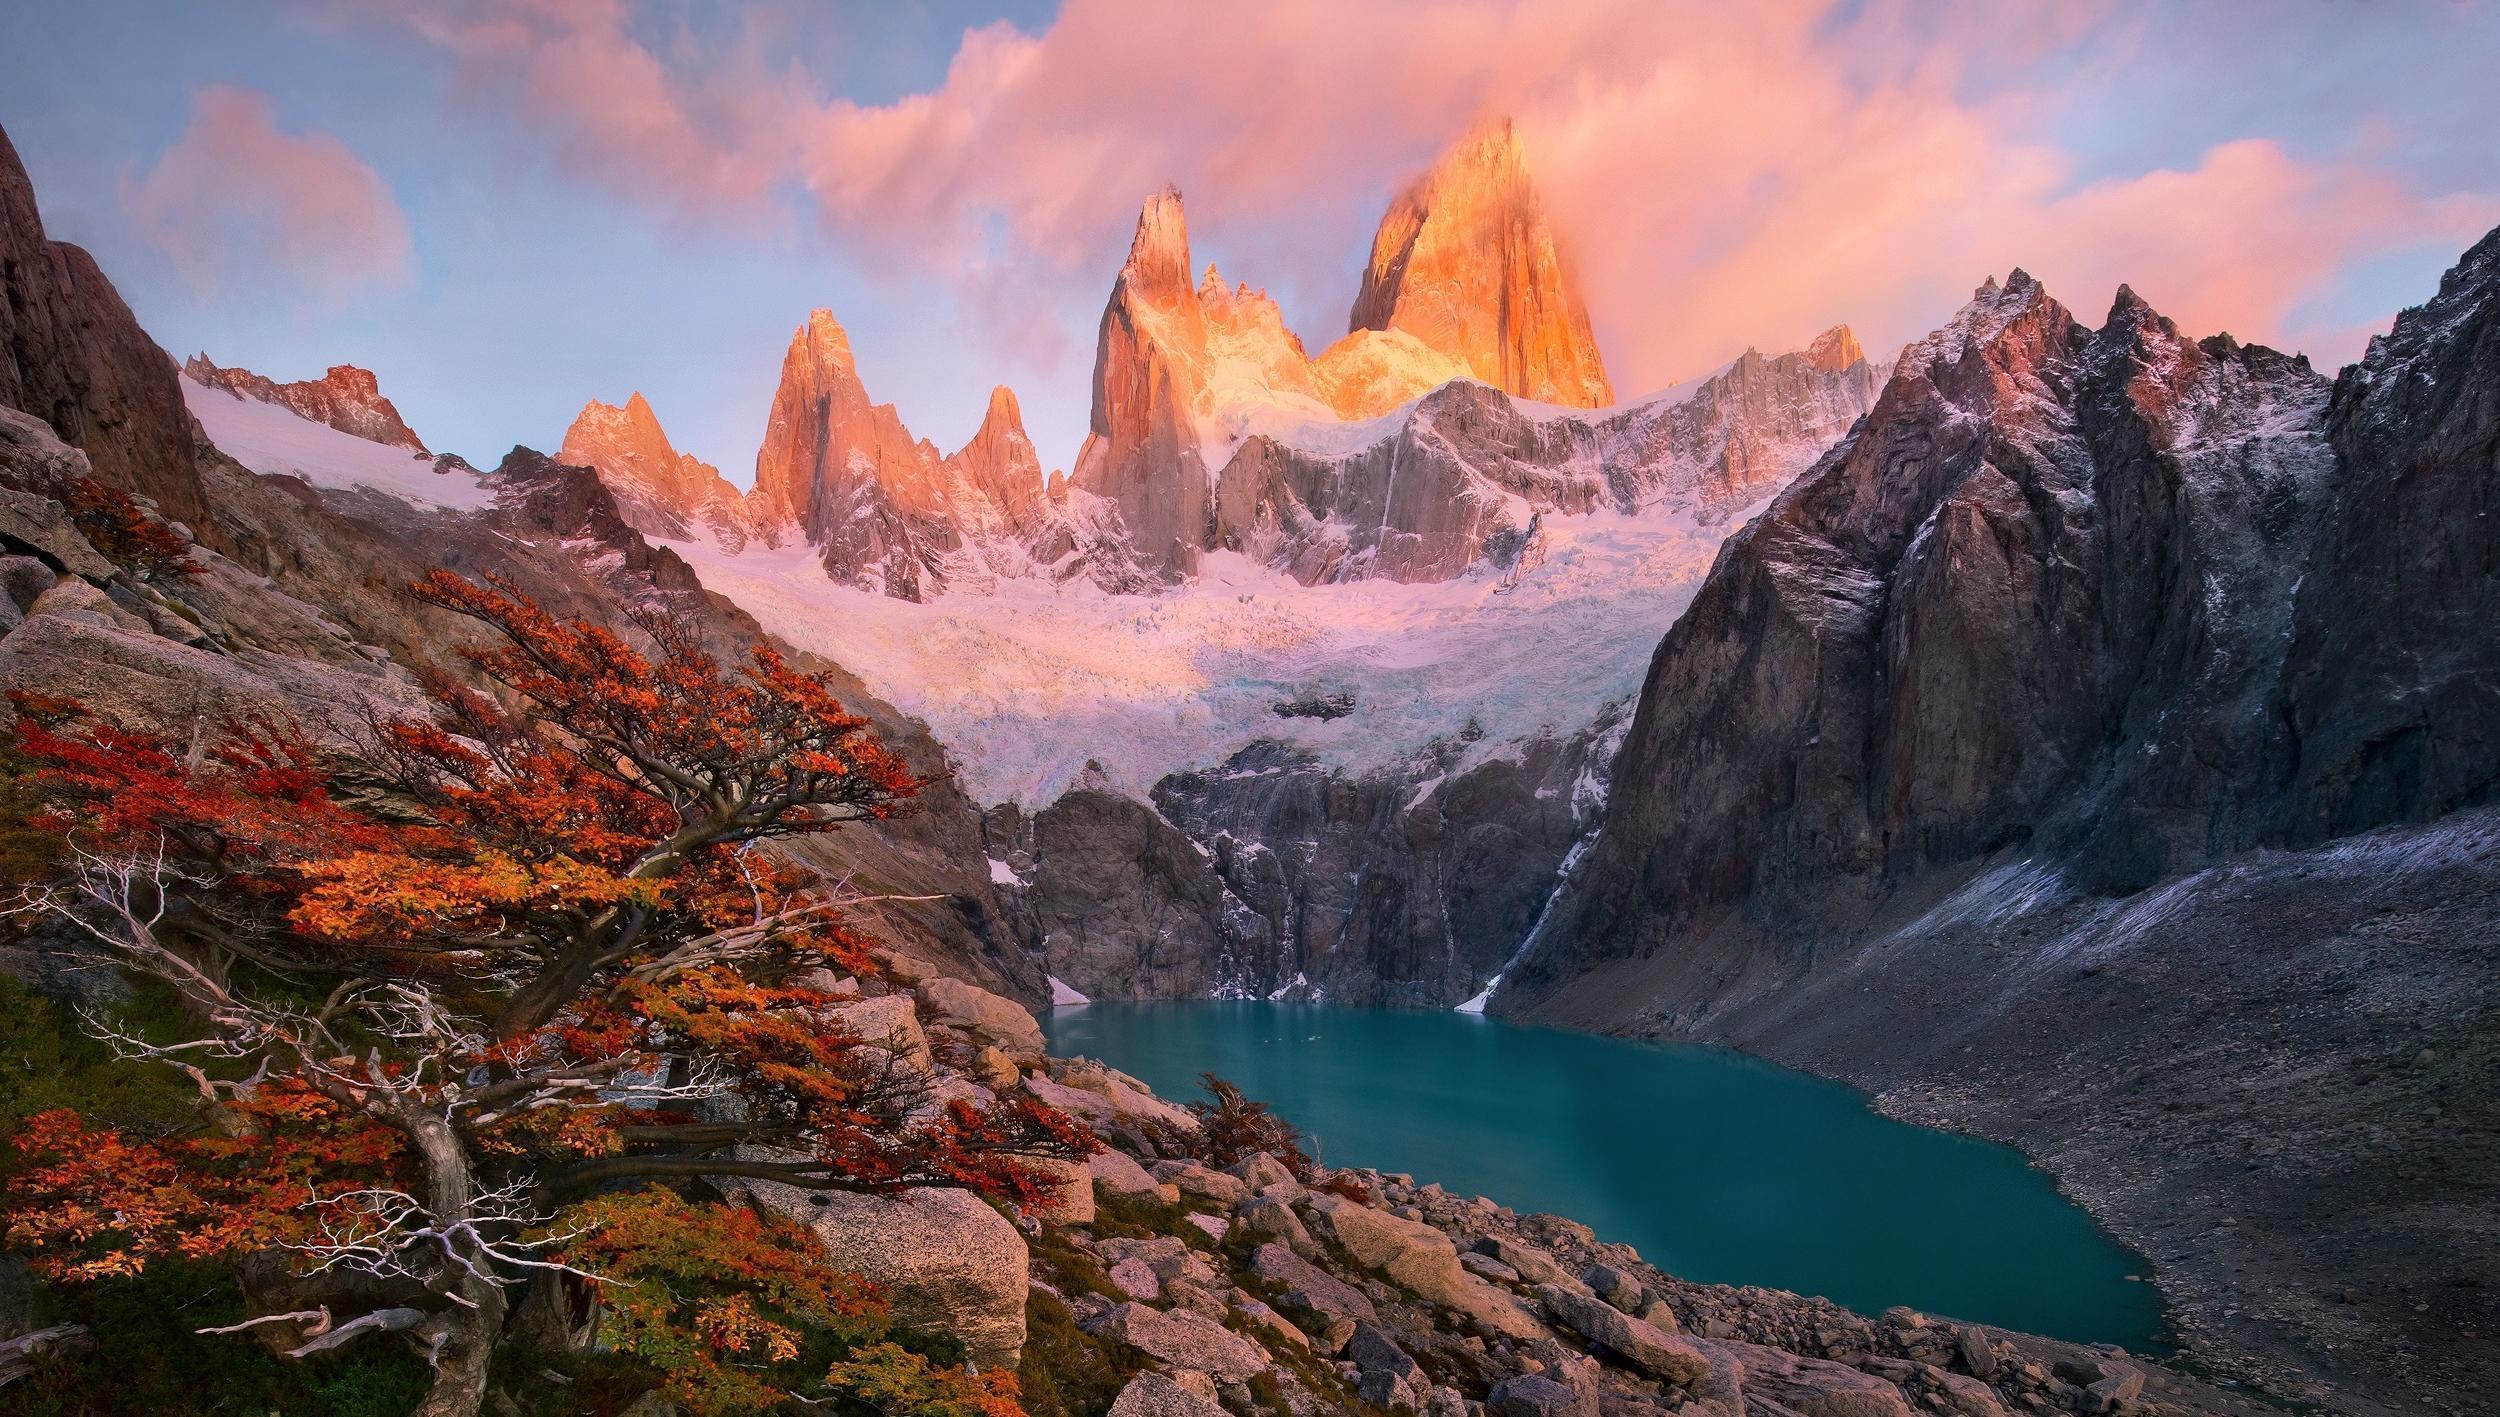 1680x945px Patagonia (273.45 KB).03.2015